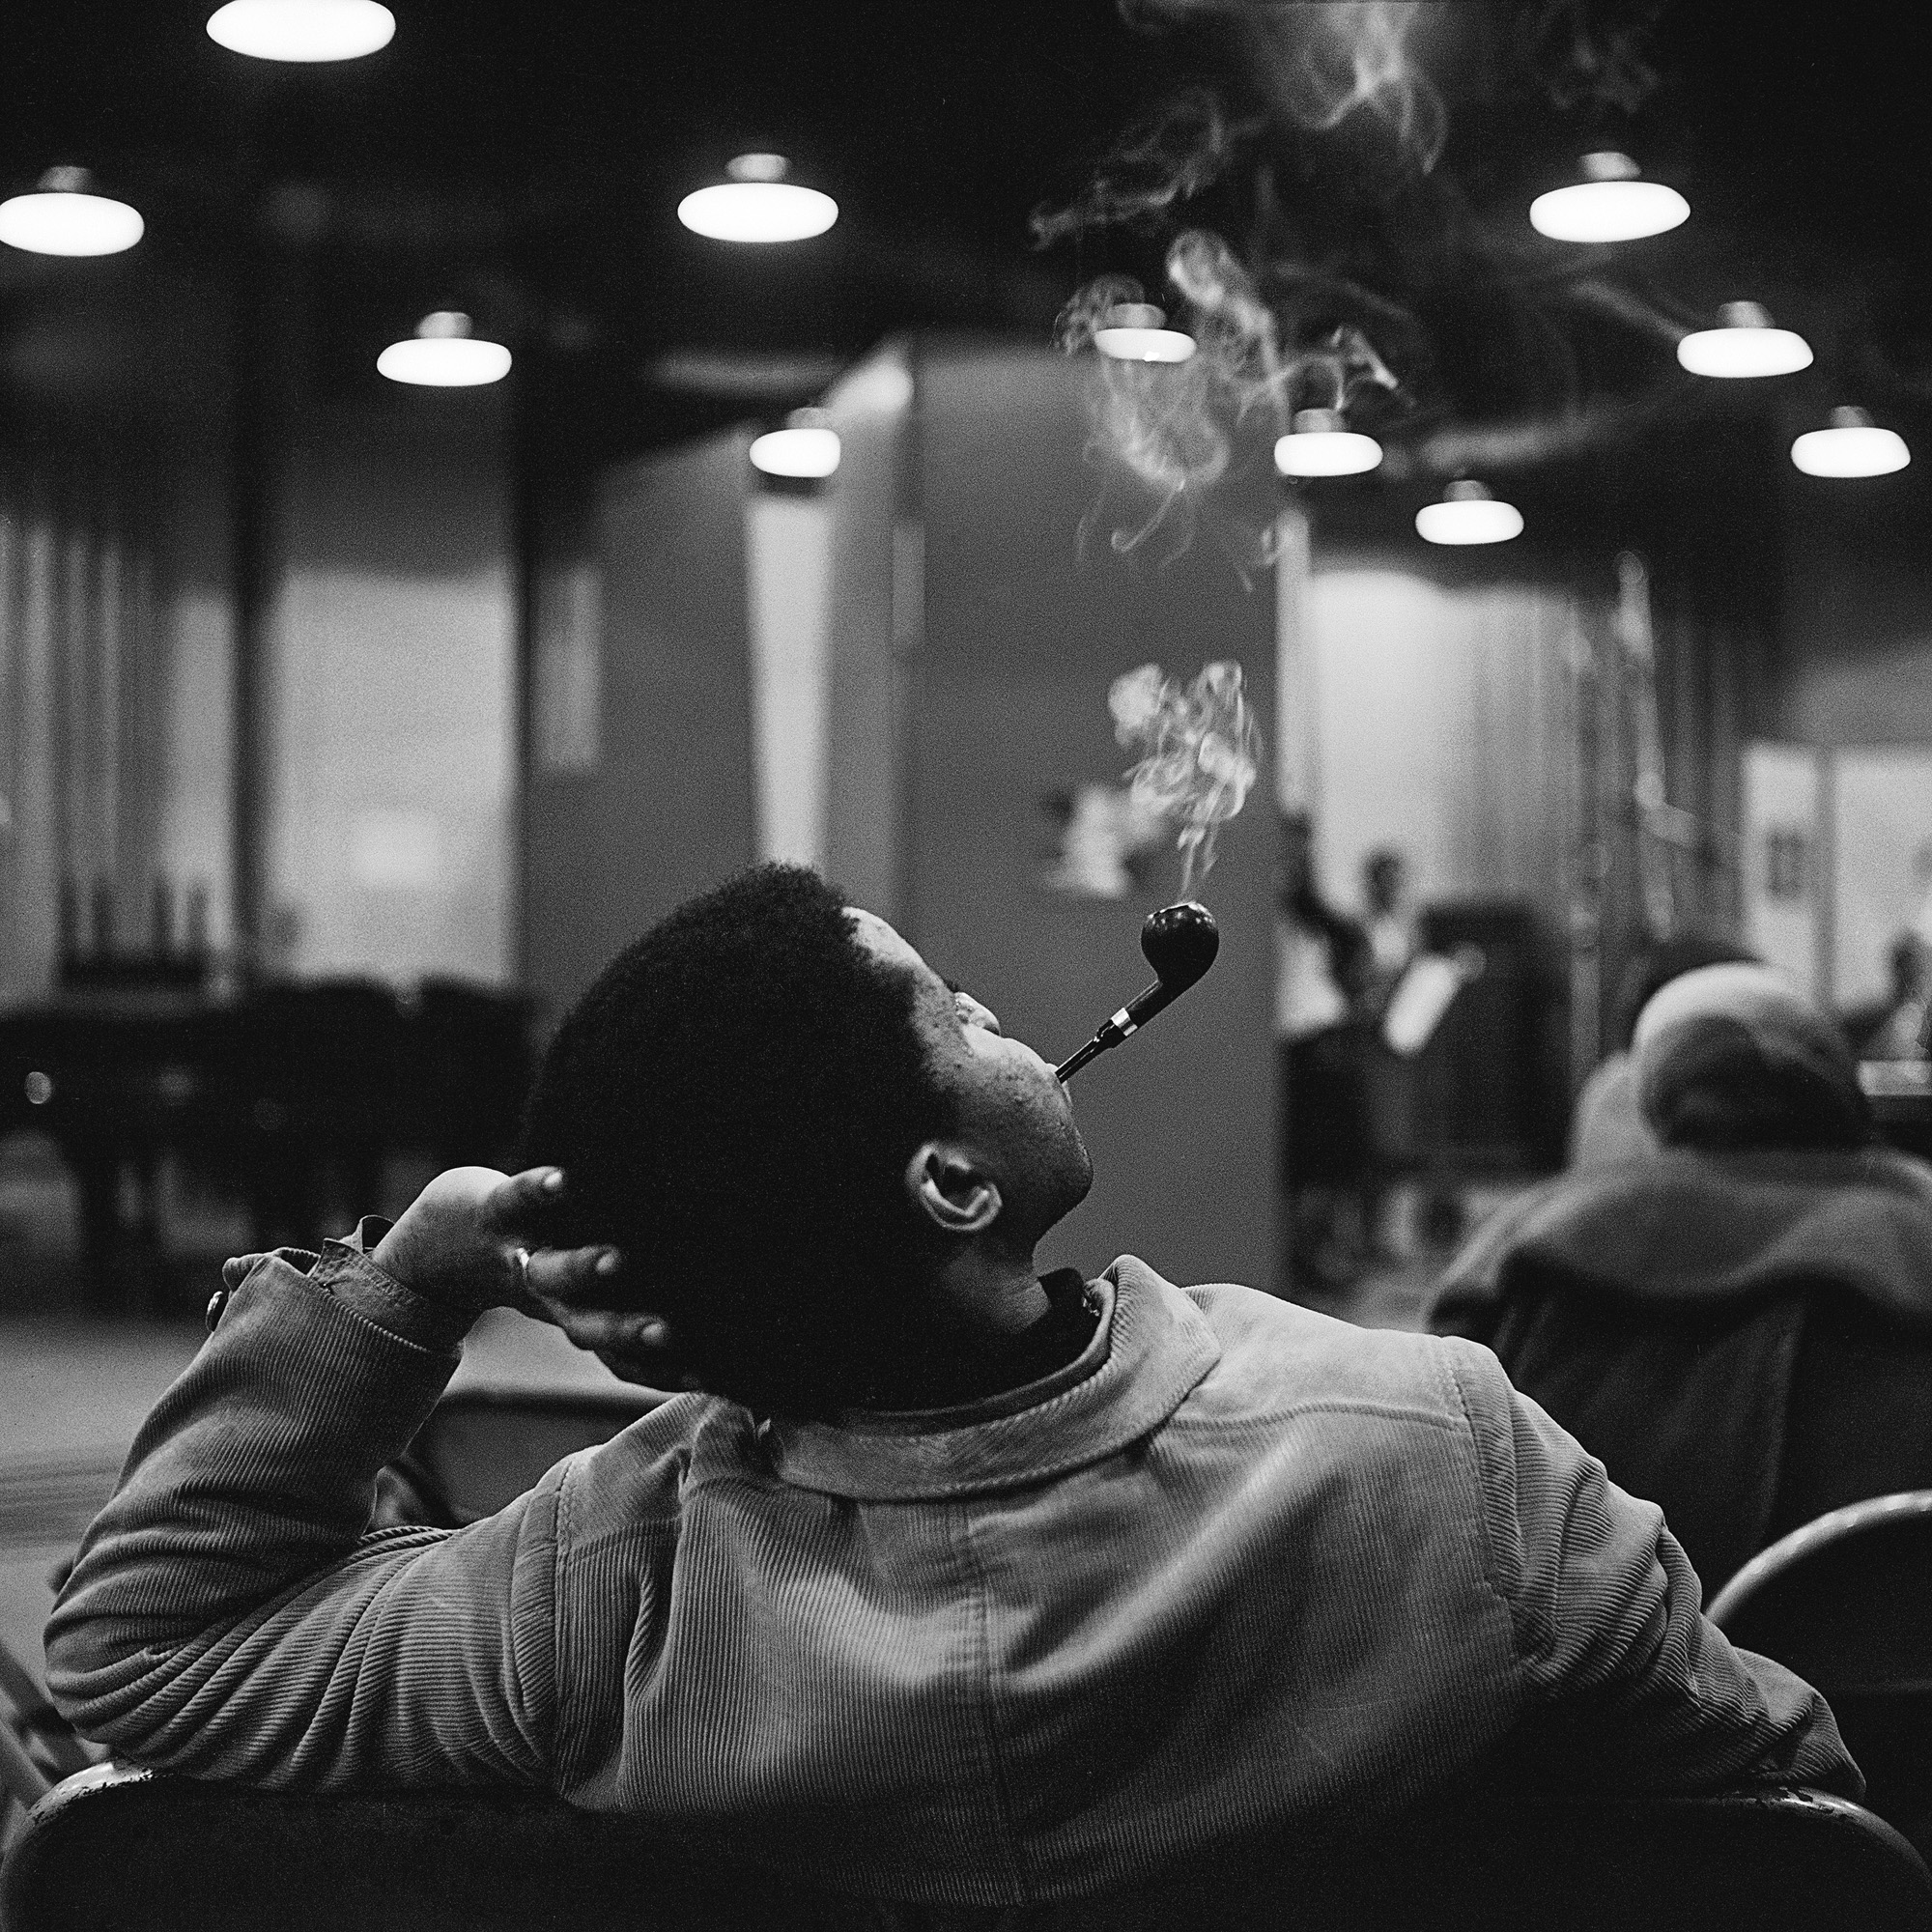 Man smoking in a ballroom